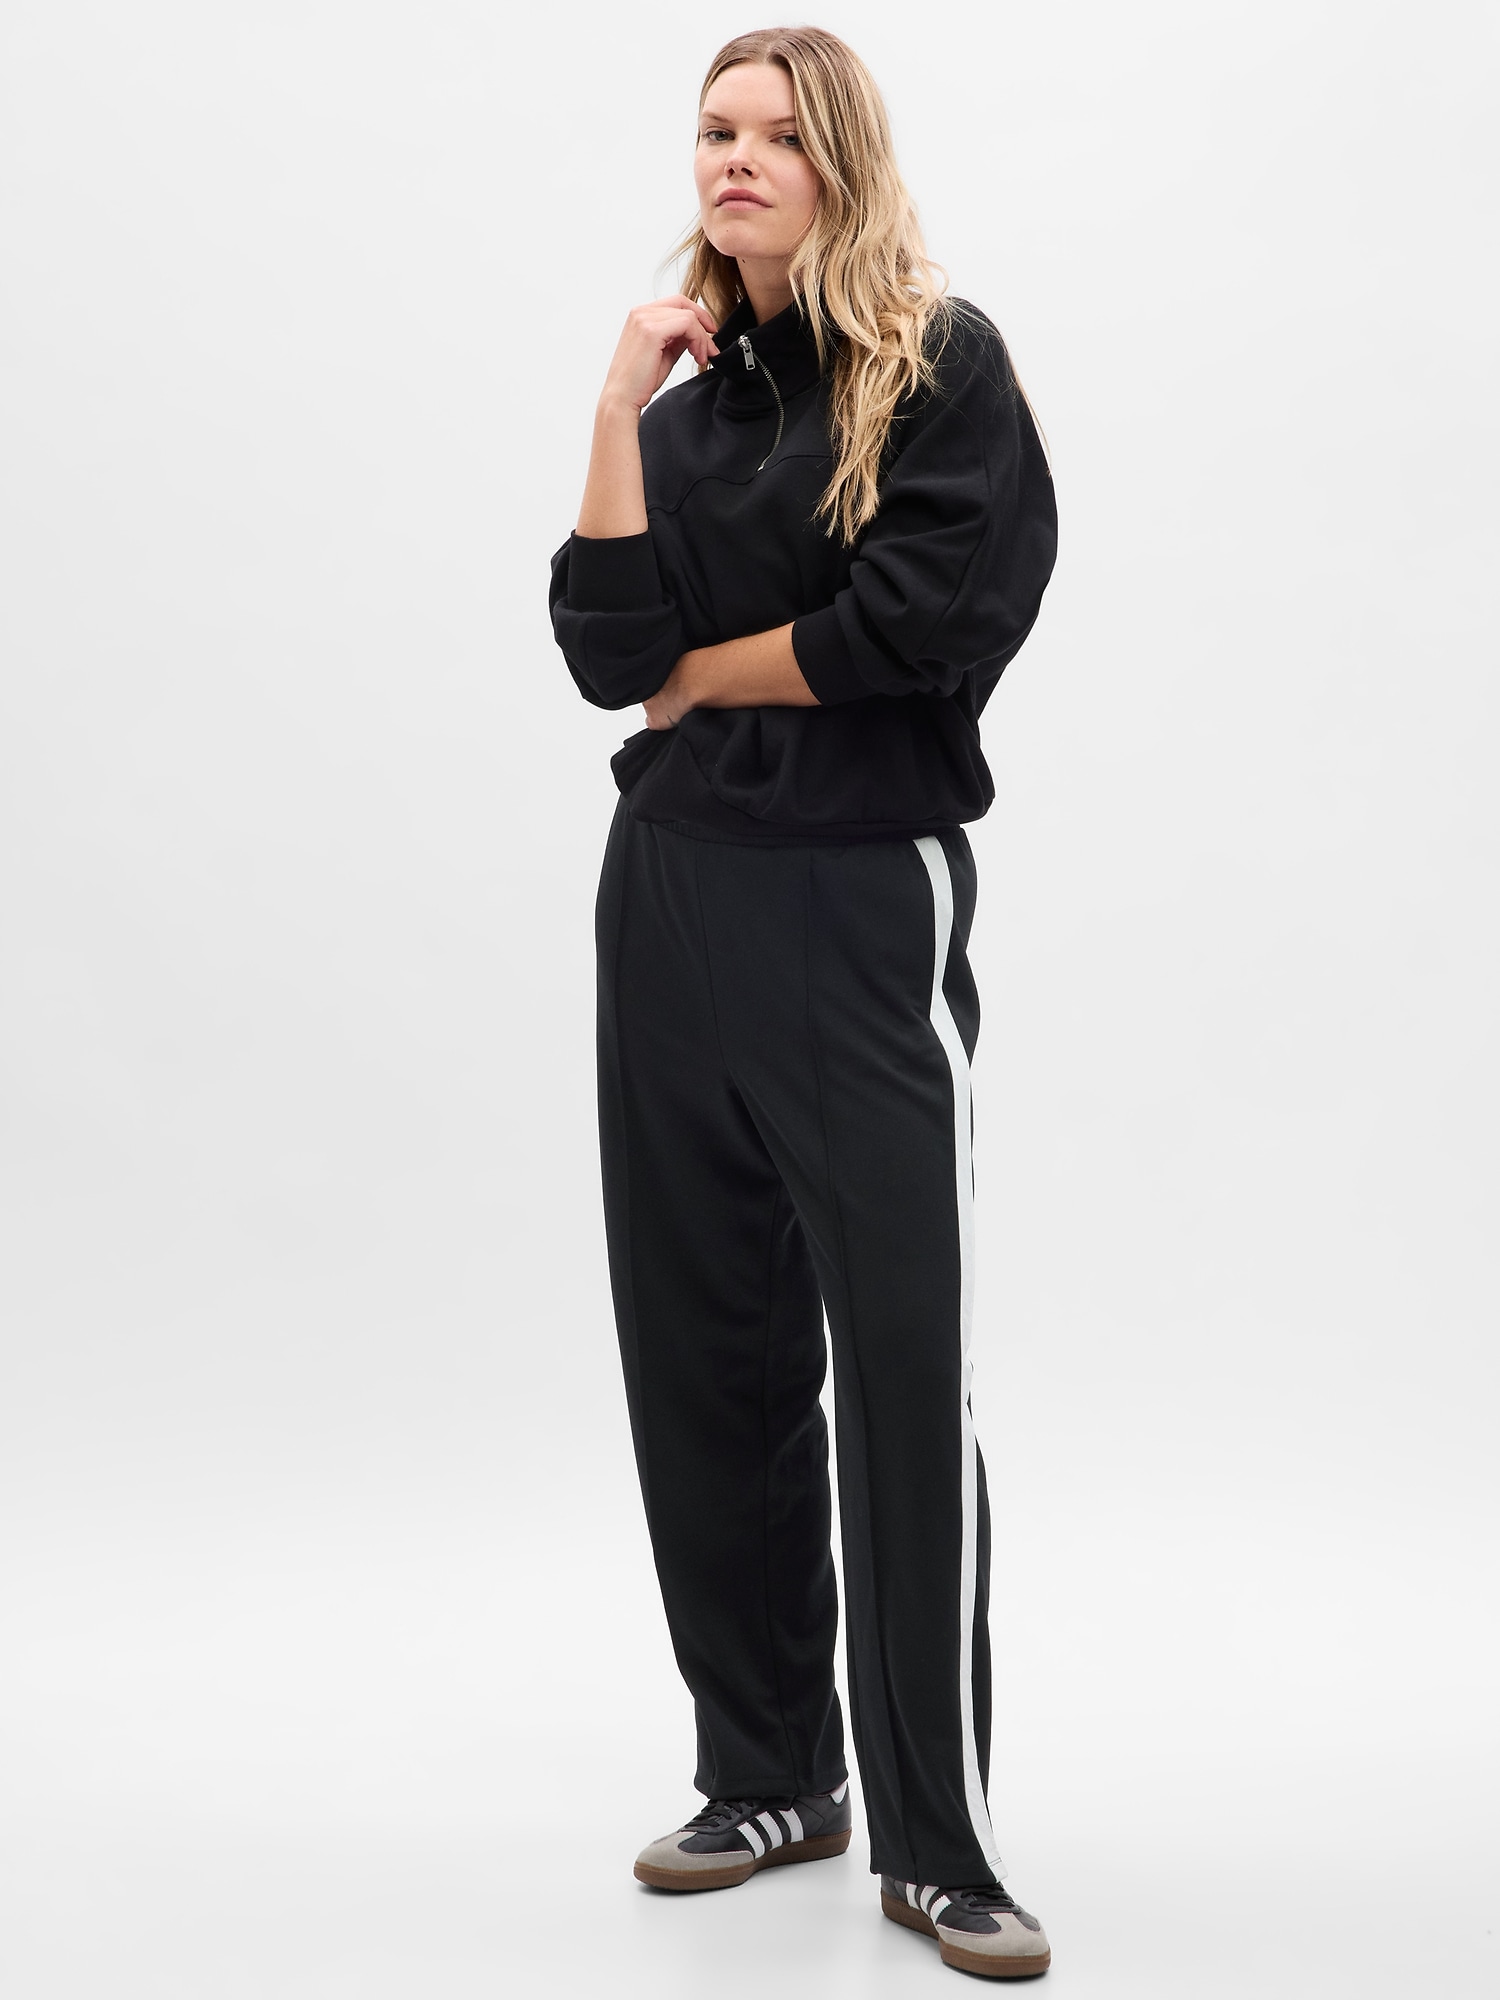 Women's Cold Weather Pants. Nike.com